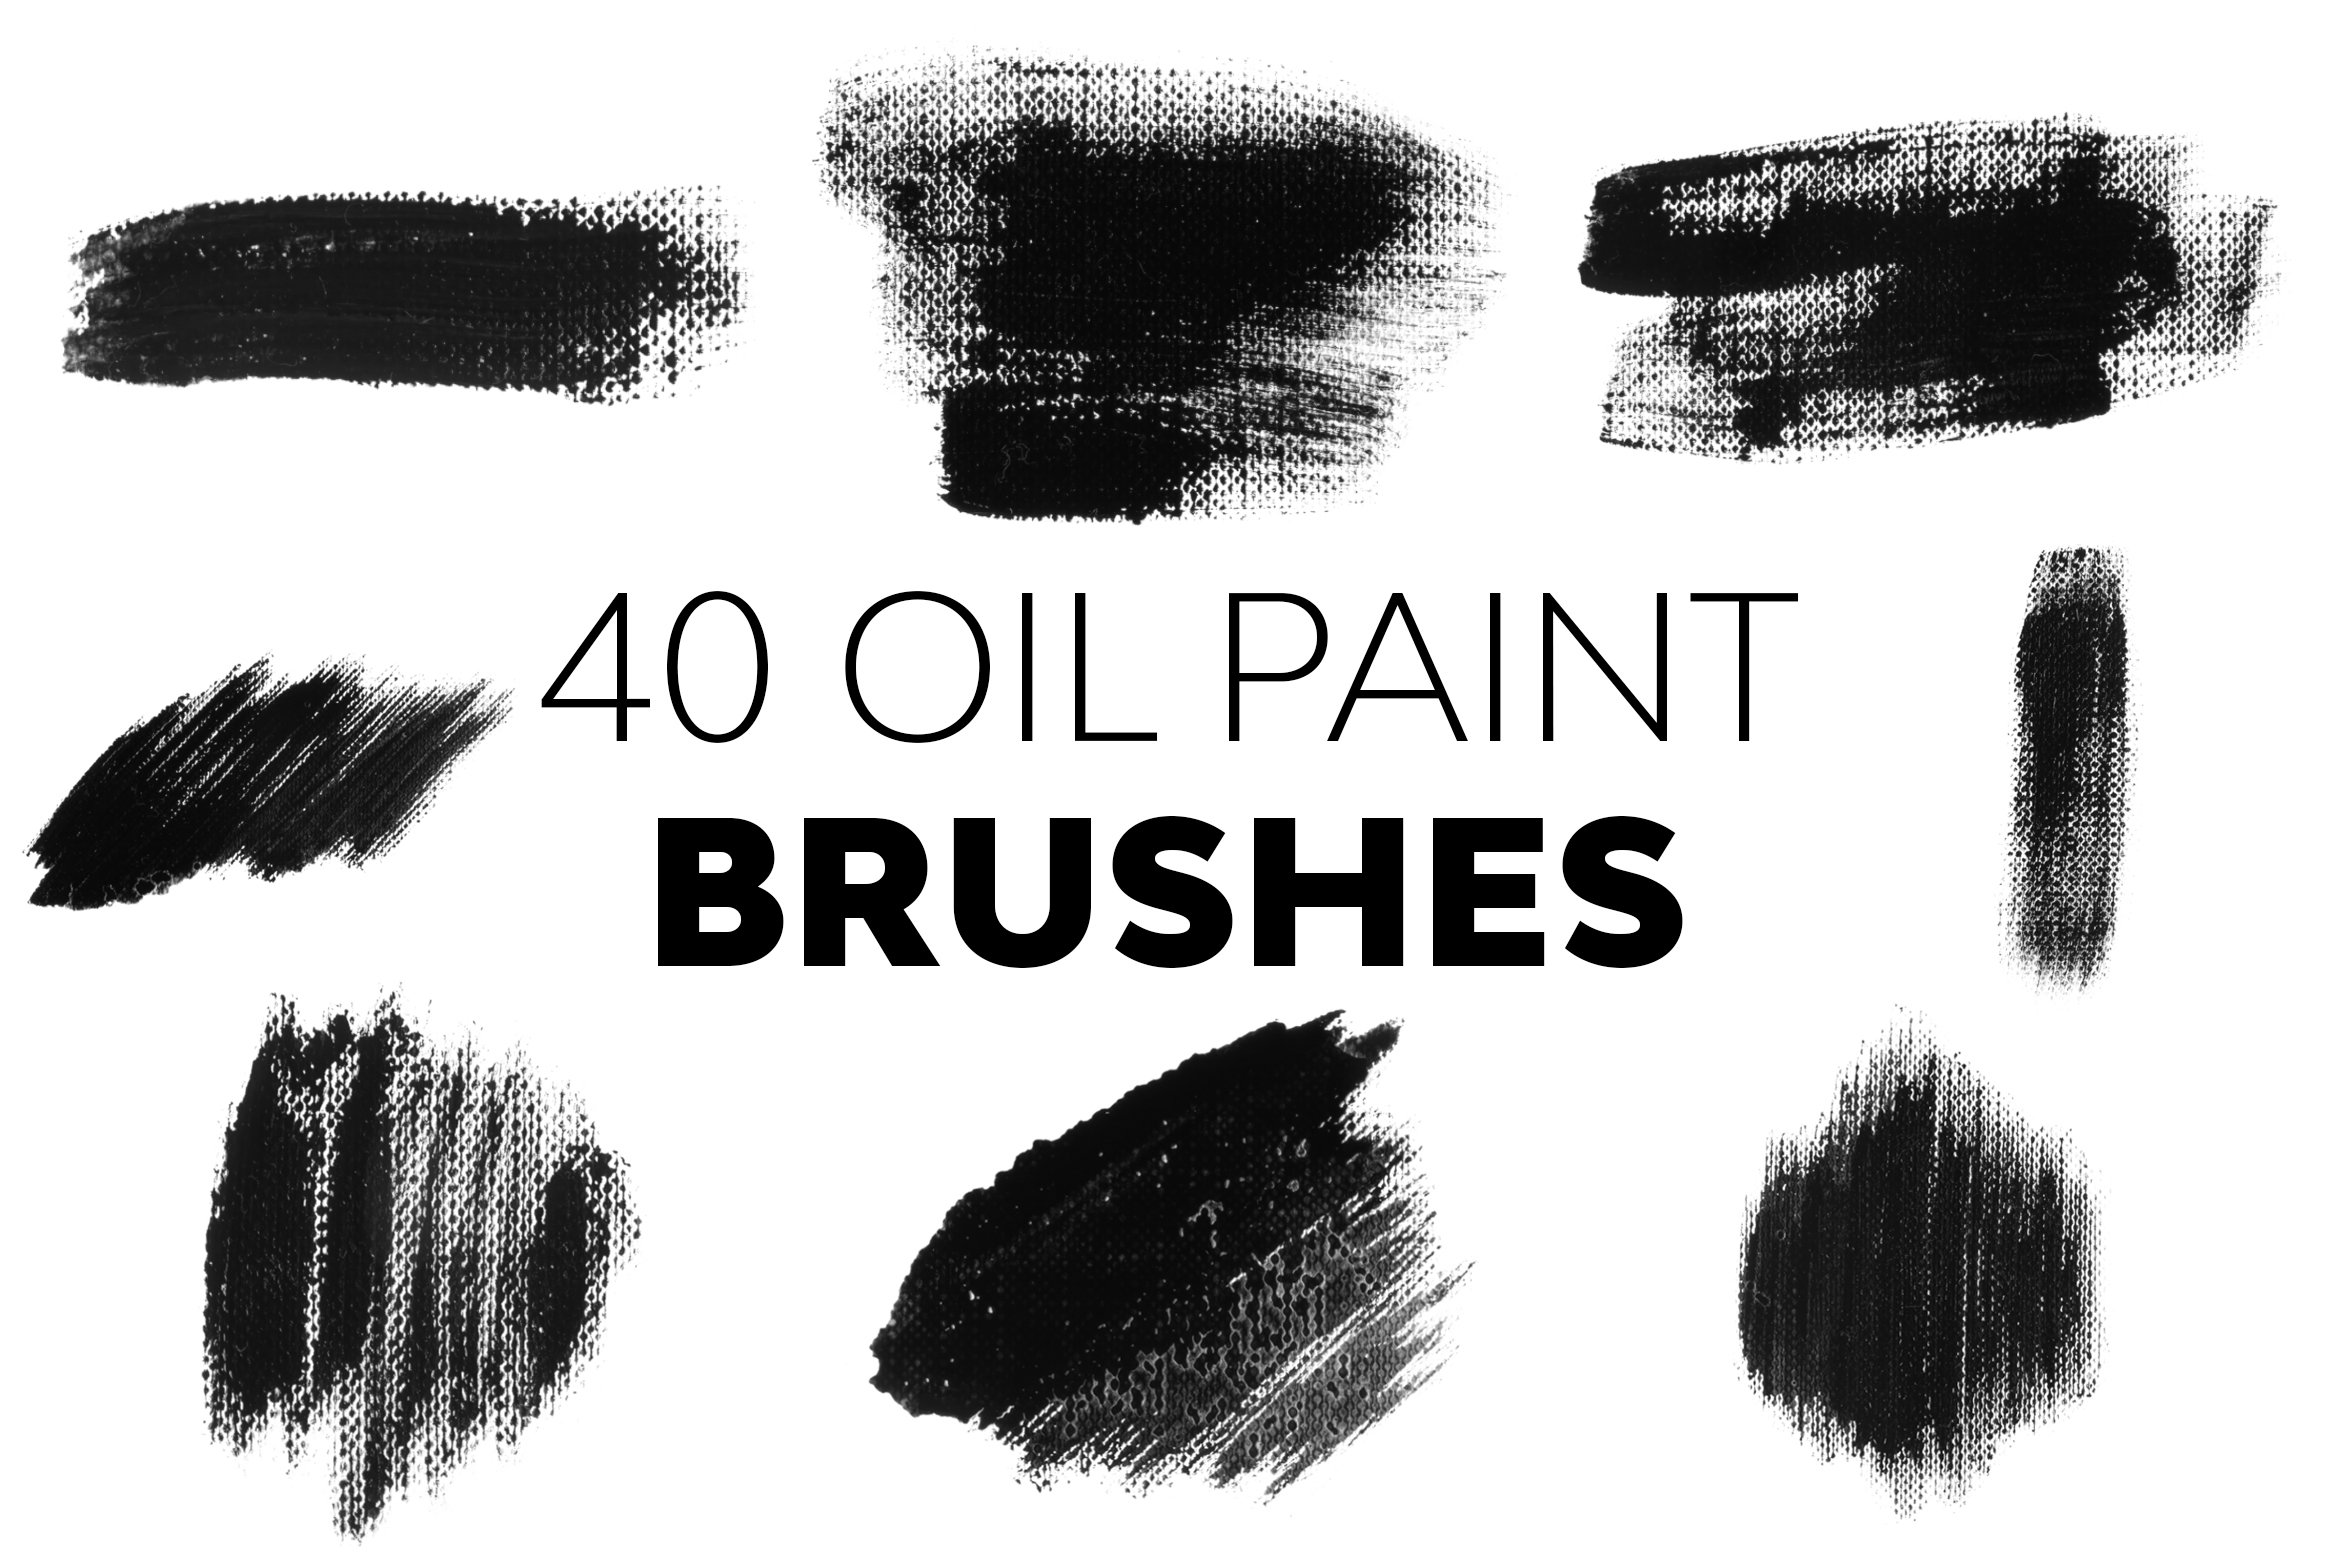 Oil Paint Brushescover image.